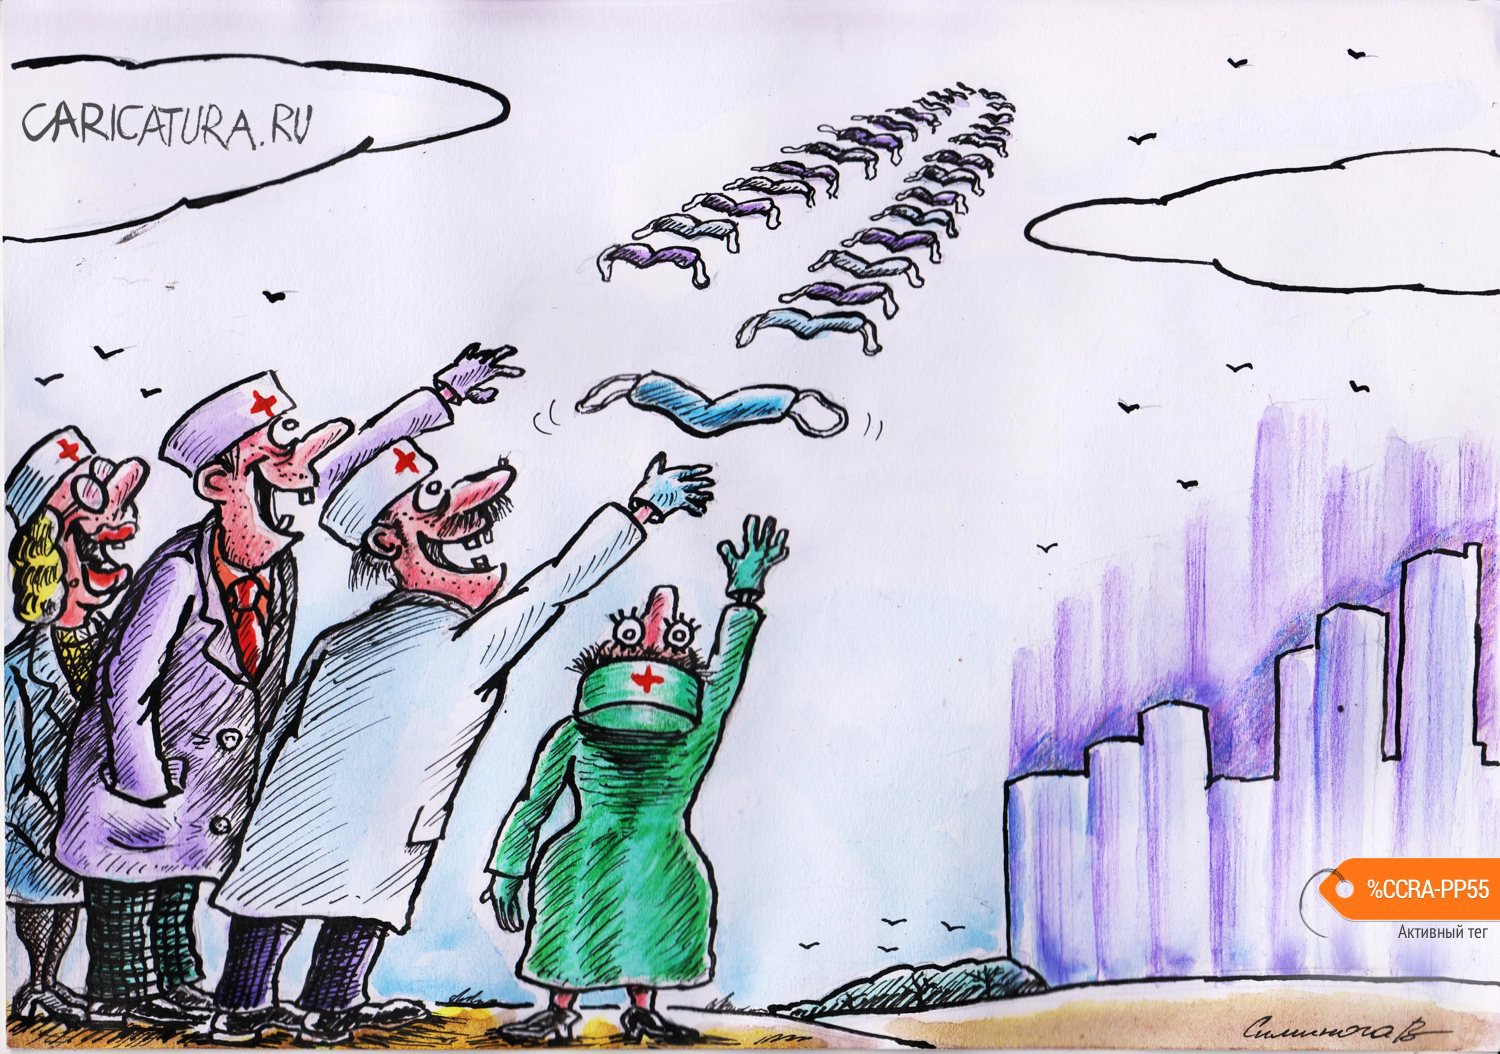 Карикатура "Маски сброшены", Vadim Siminoga